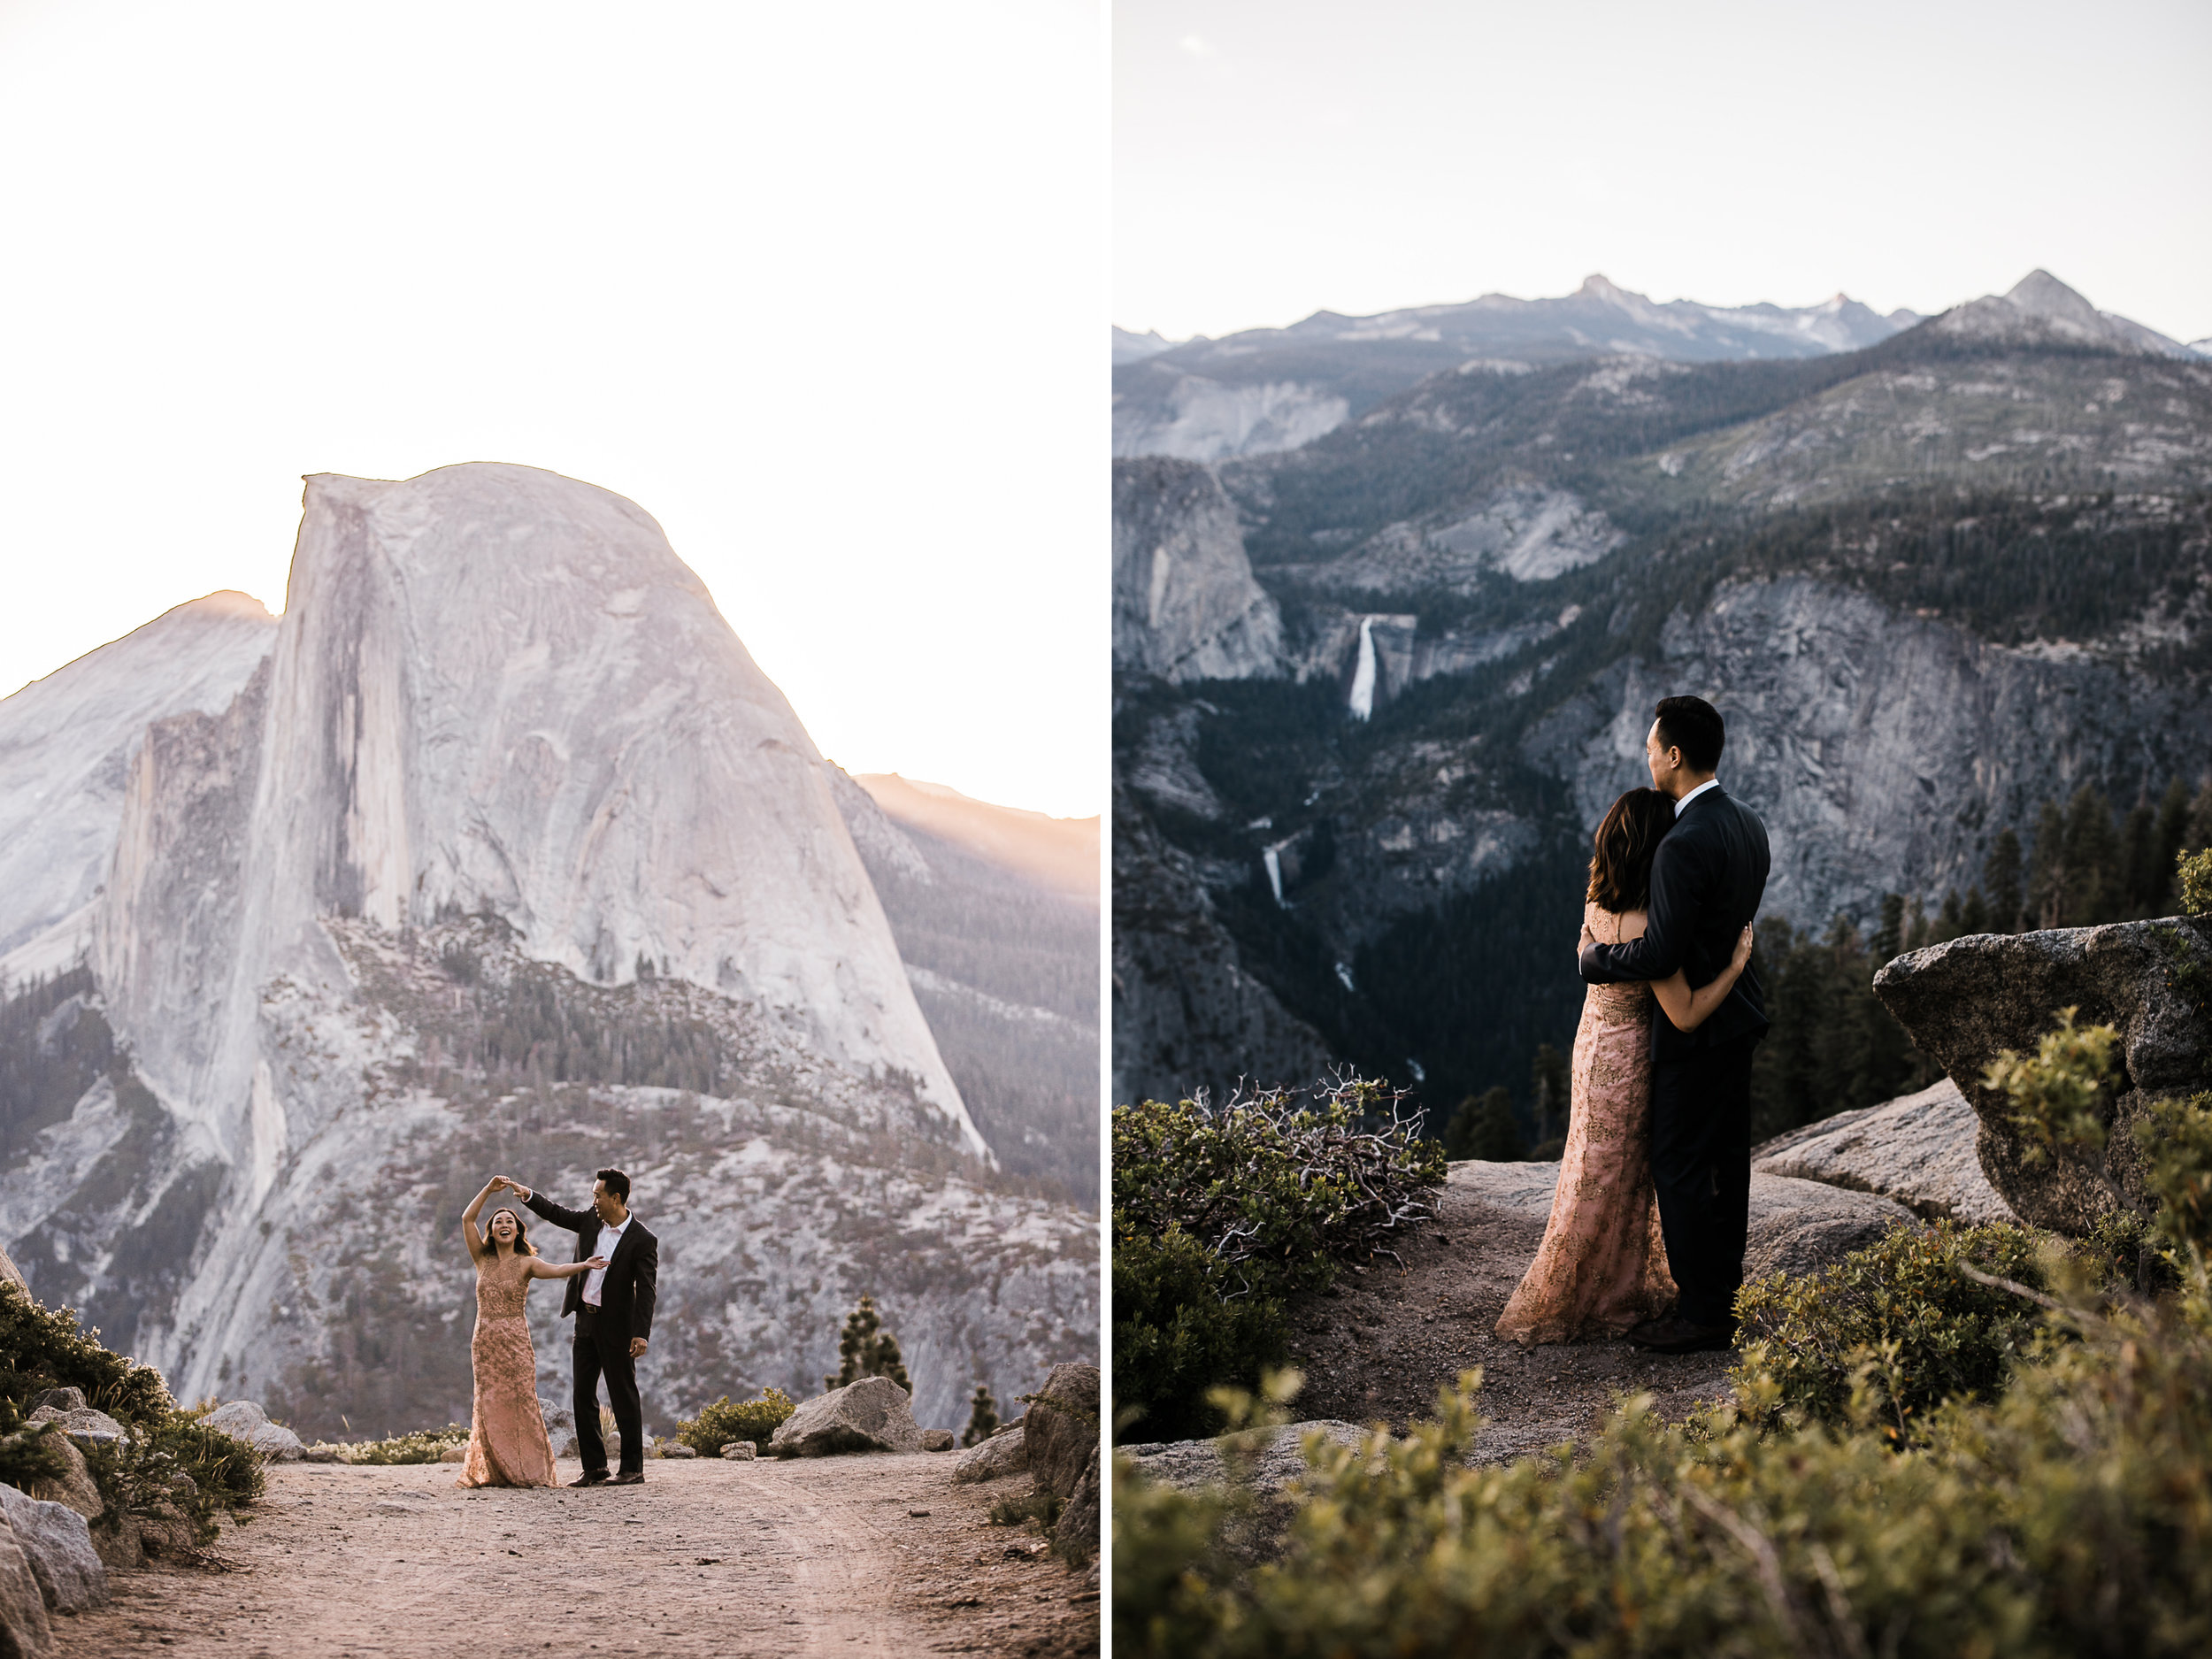 michelle + doug's adventure session at glacier point | 10 year wedding anniversary celebration | yosemite elopement inspiration | the hearnes adventure photography